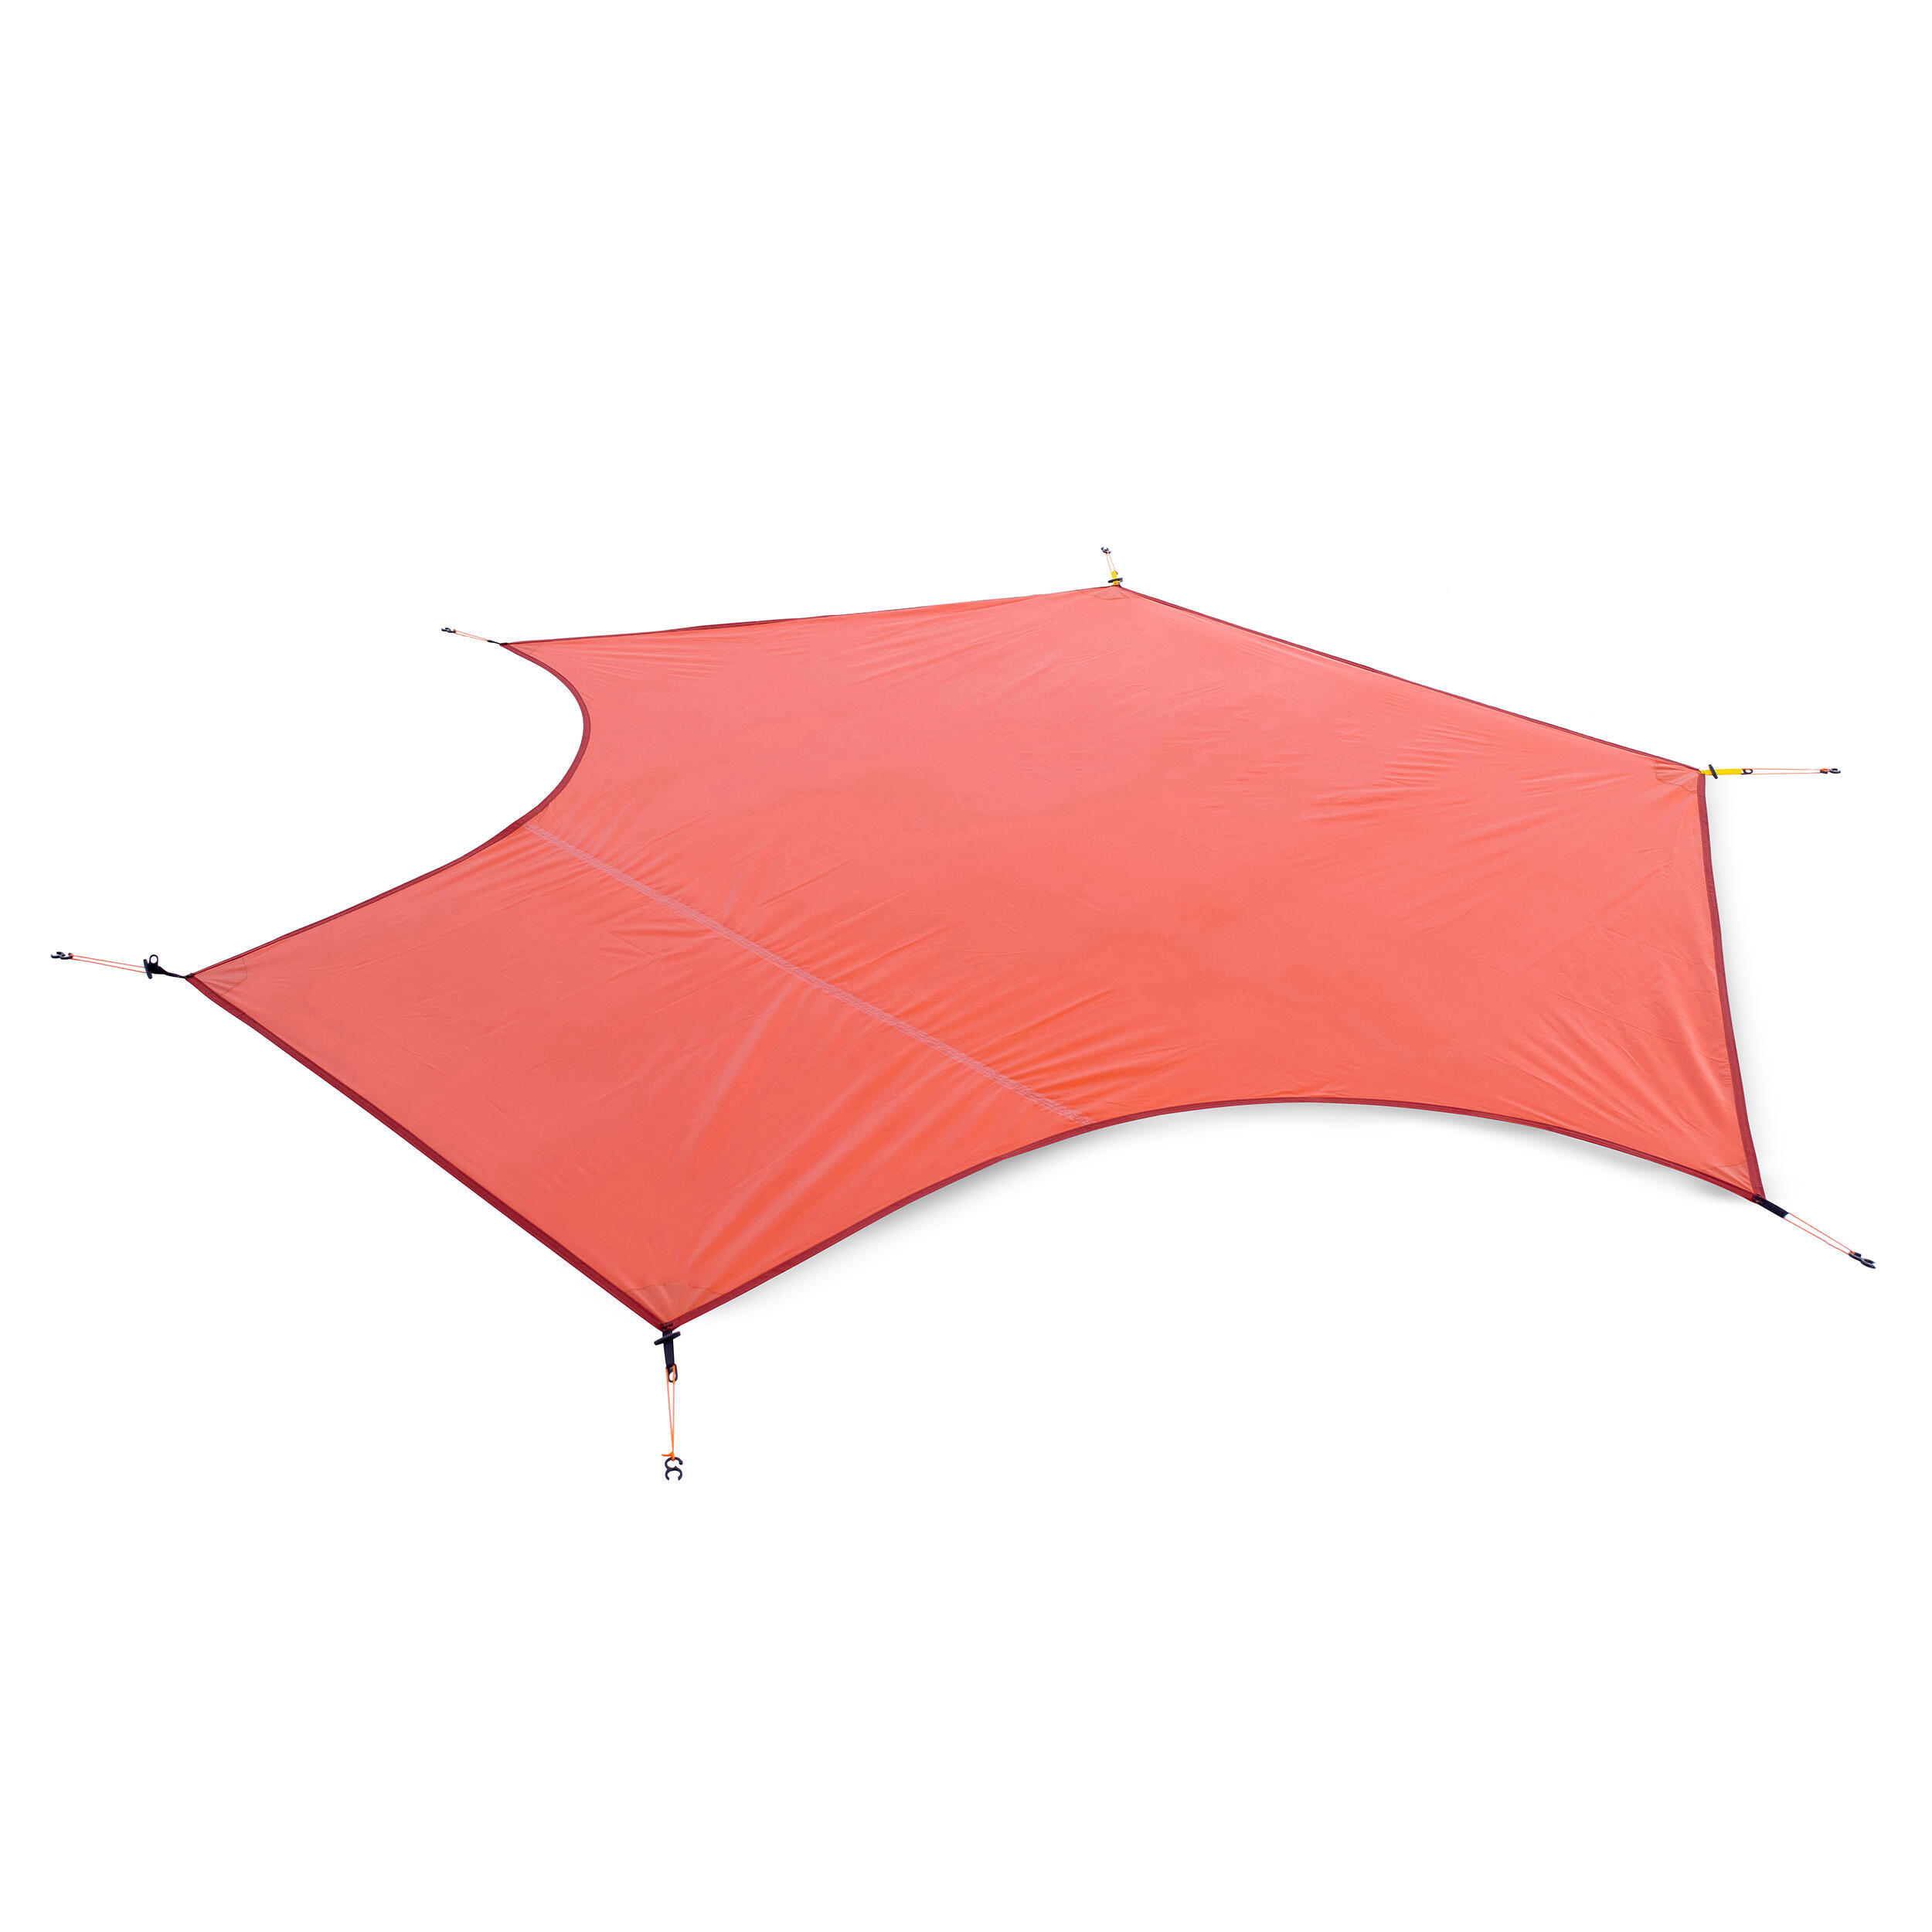 Ultralight Tent Groundsheet for 2 People - Orange 1/3